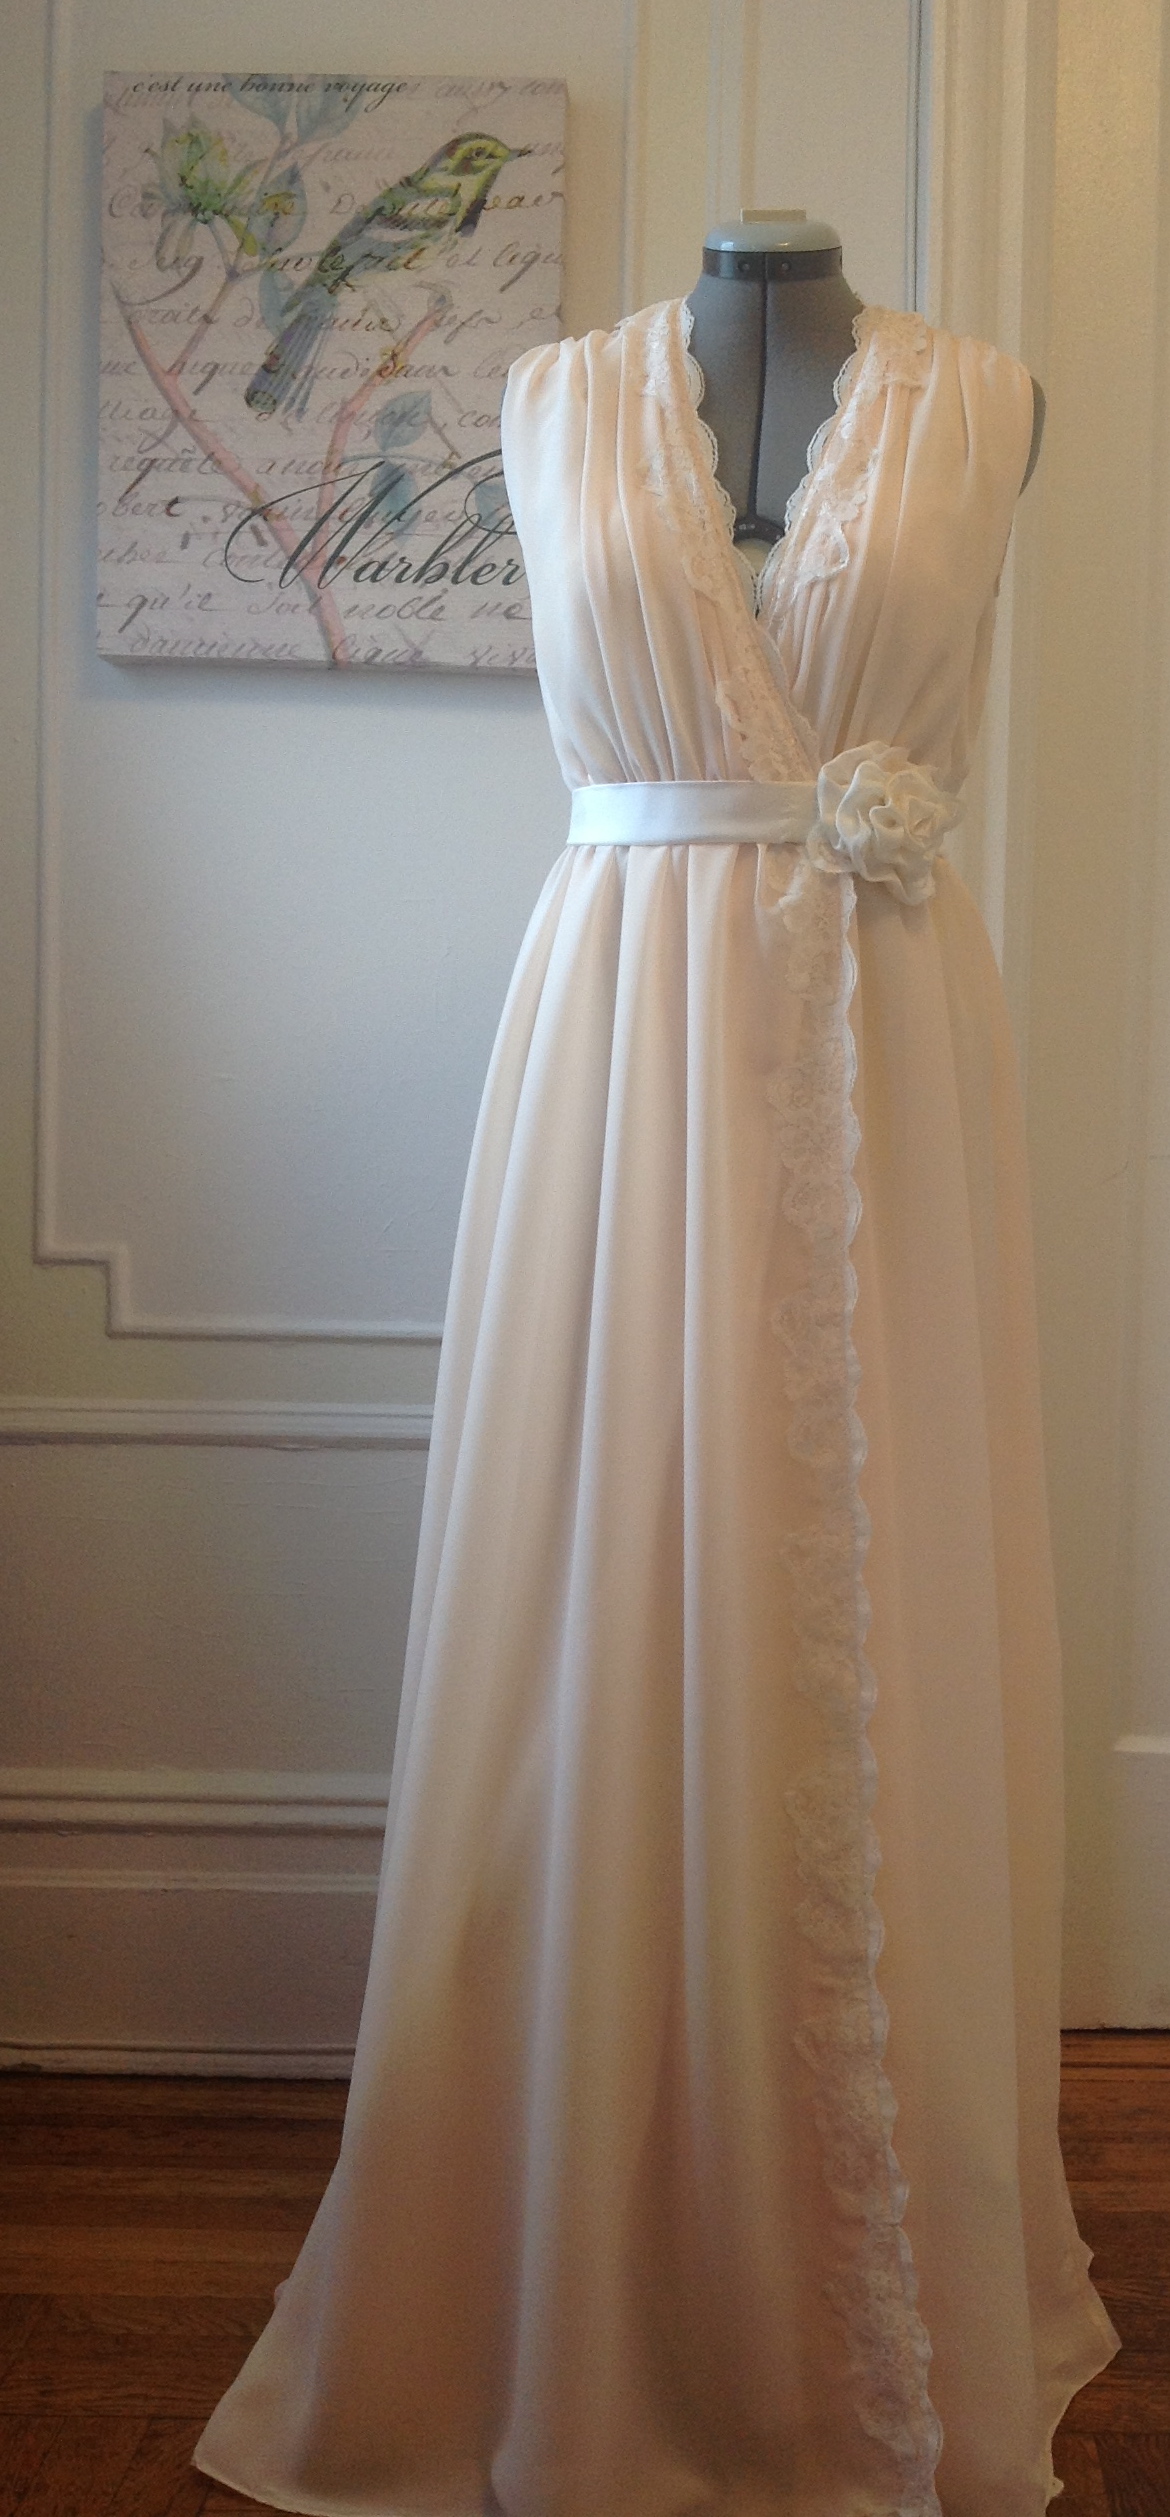 My First Wedding Dress! – Sewing Projects | BurdaStyle.com